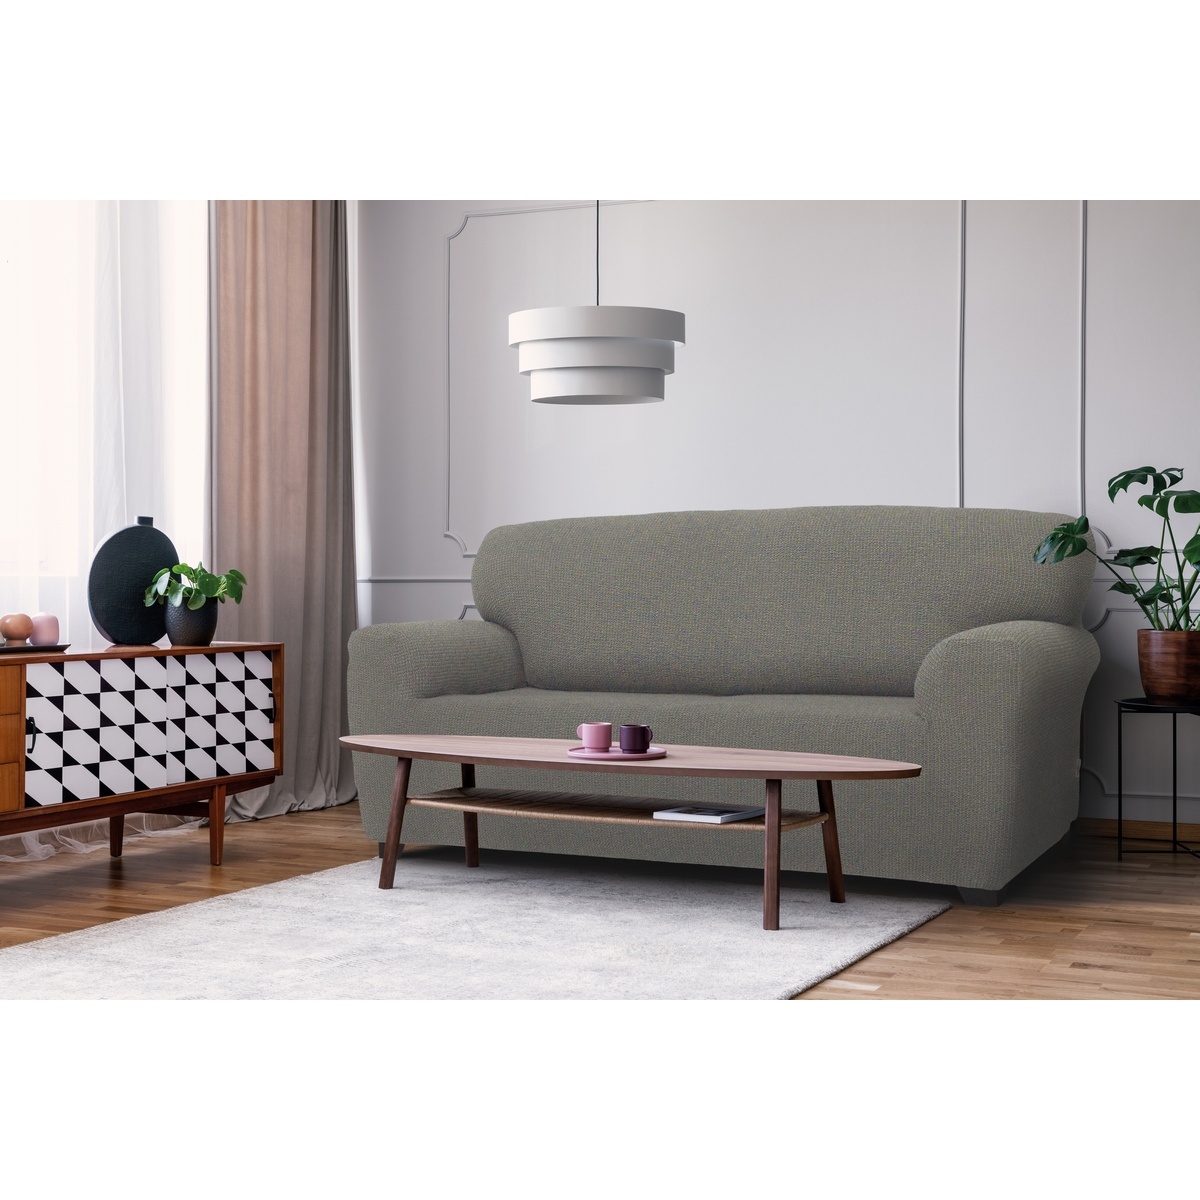 Multielasztikus kanapéhuzat világosszürke, 180 -220 cm, 180 - 220 cm